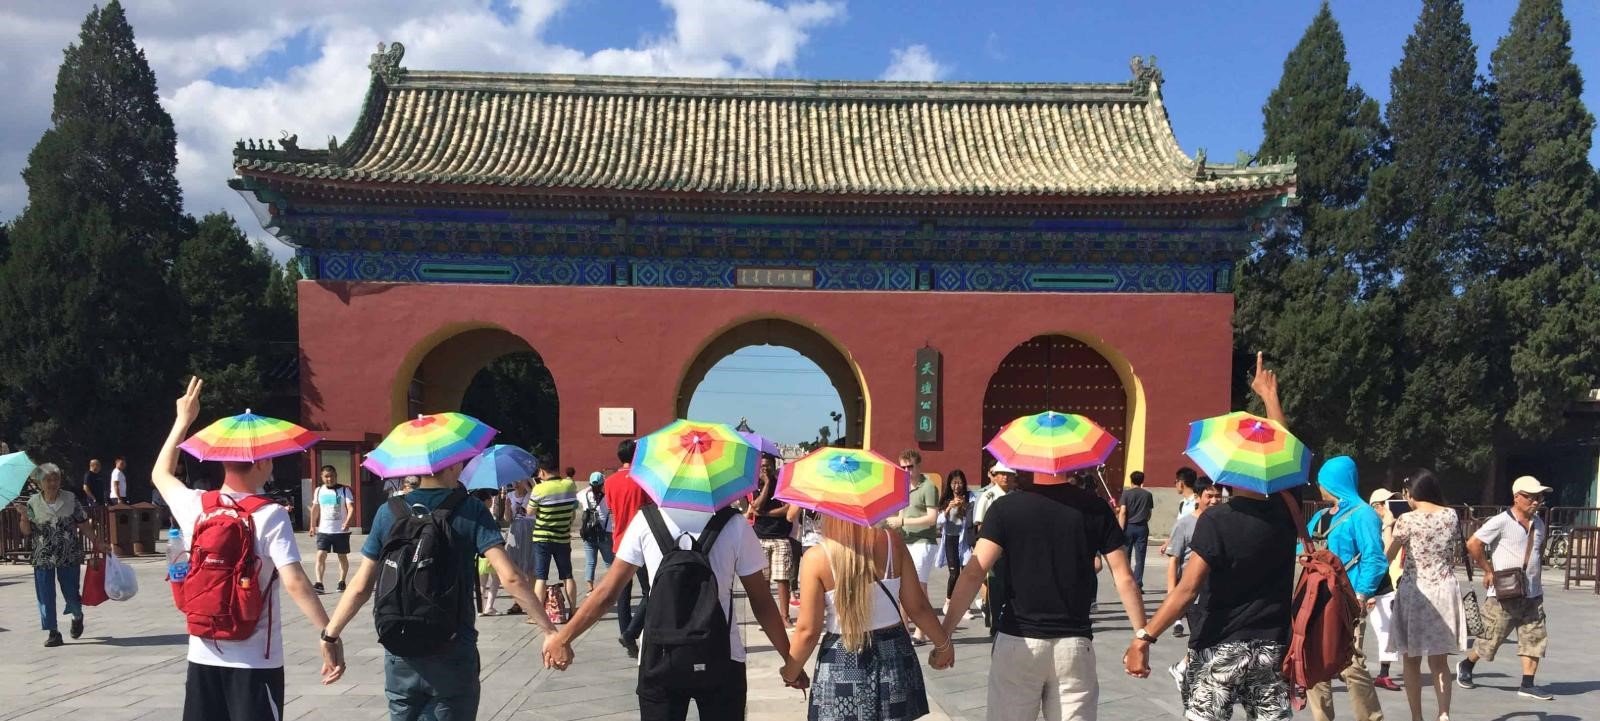 Students in China wearing umbrella hats